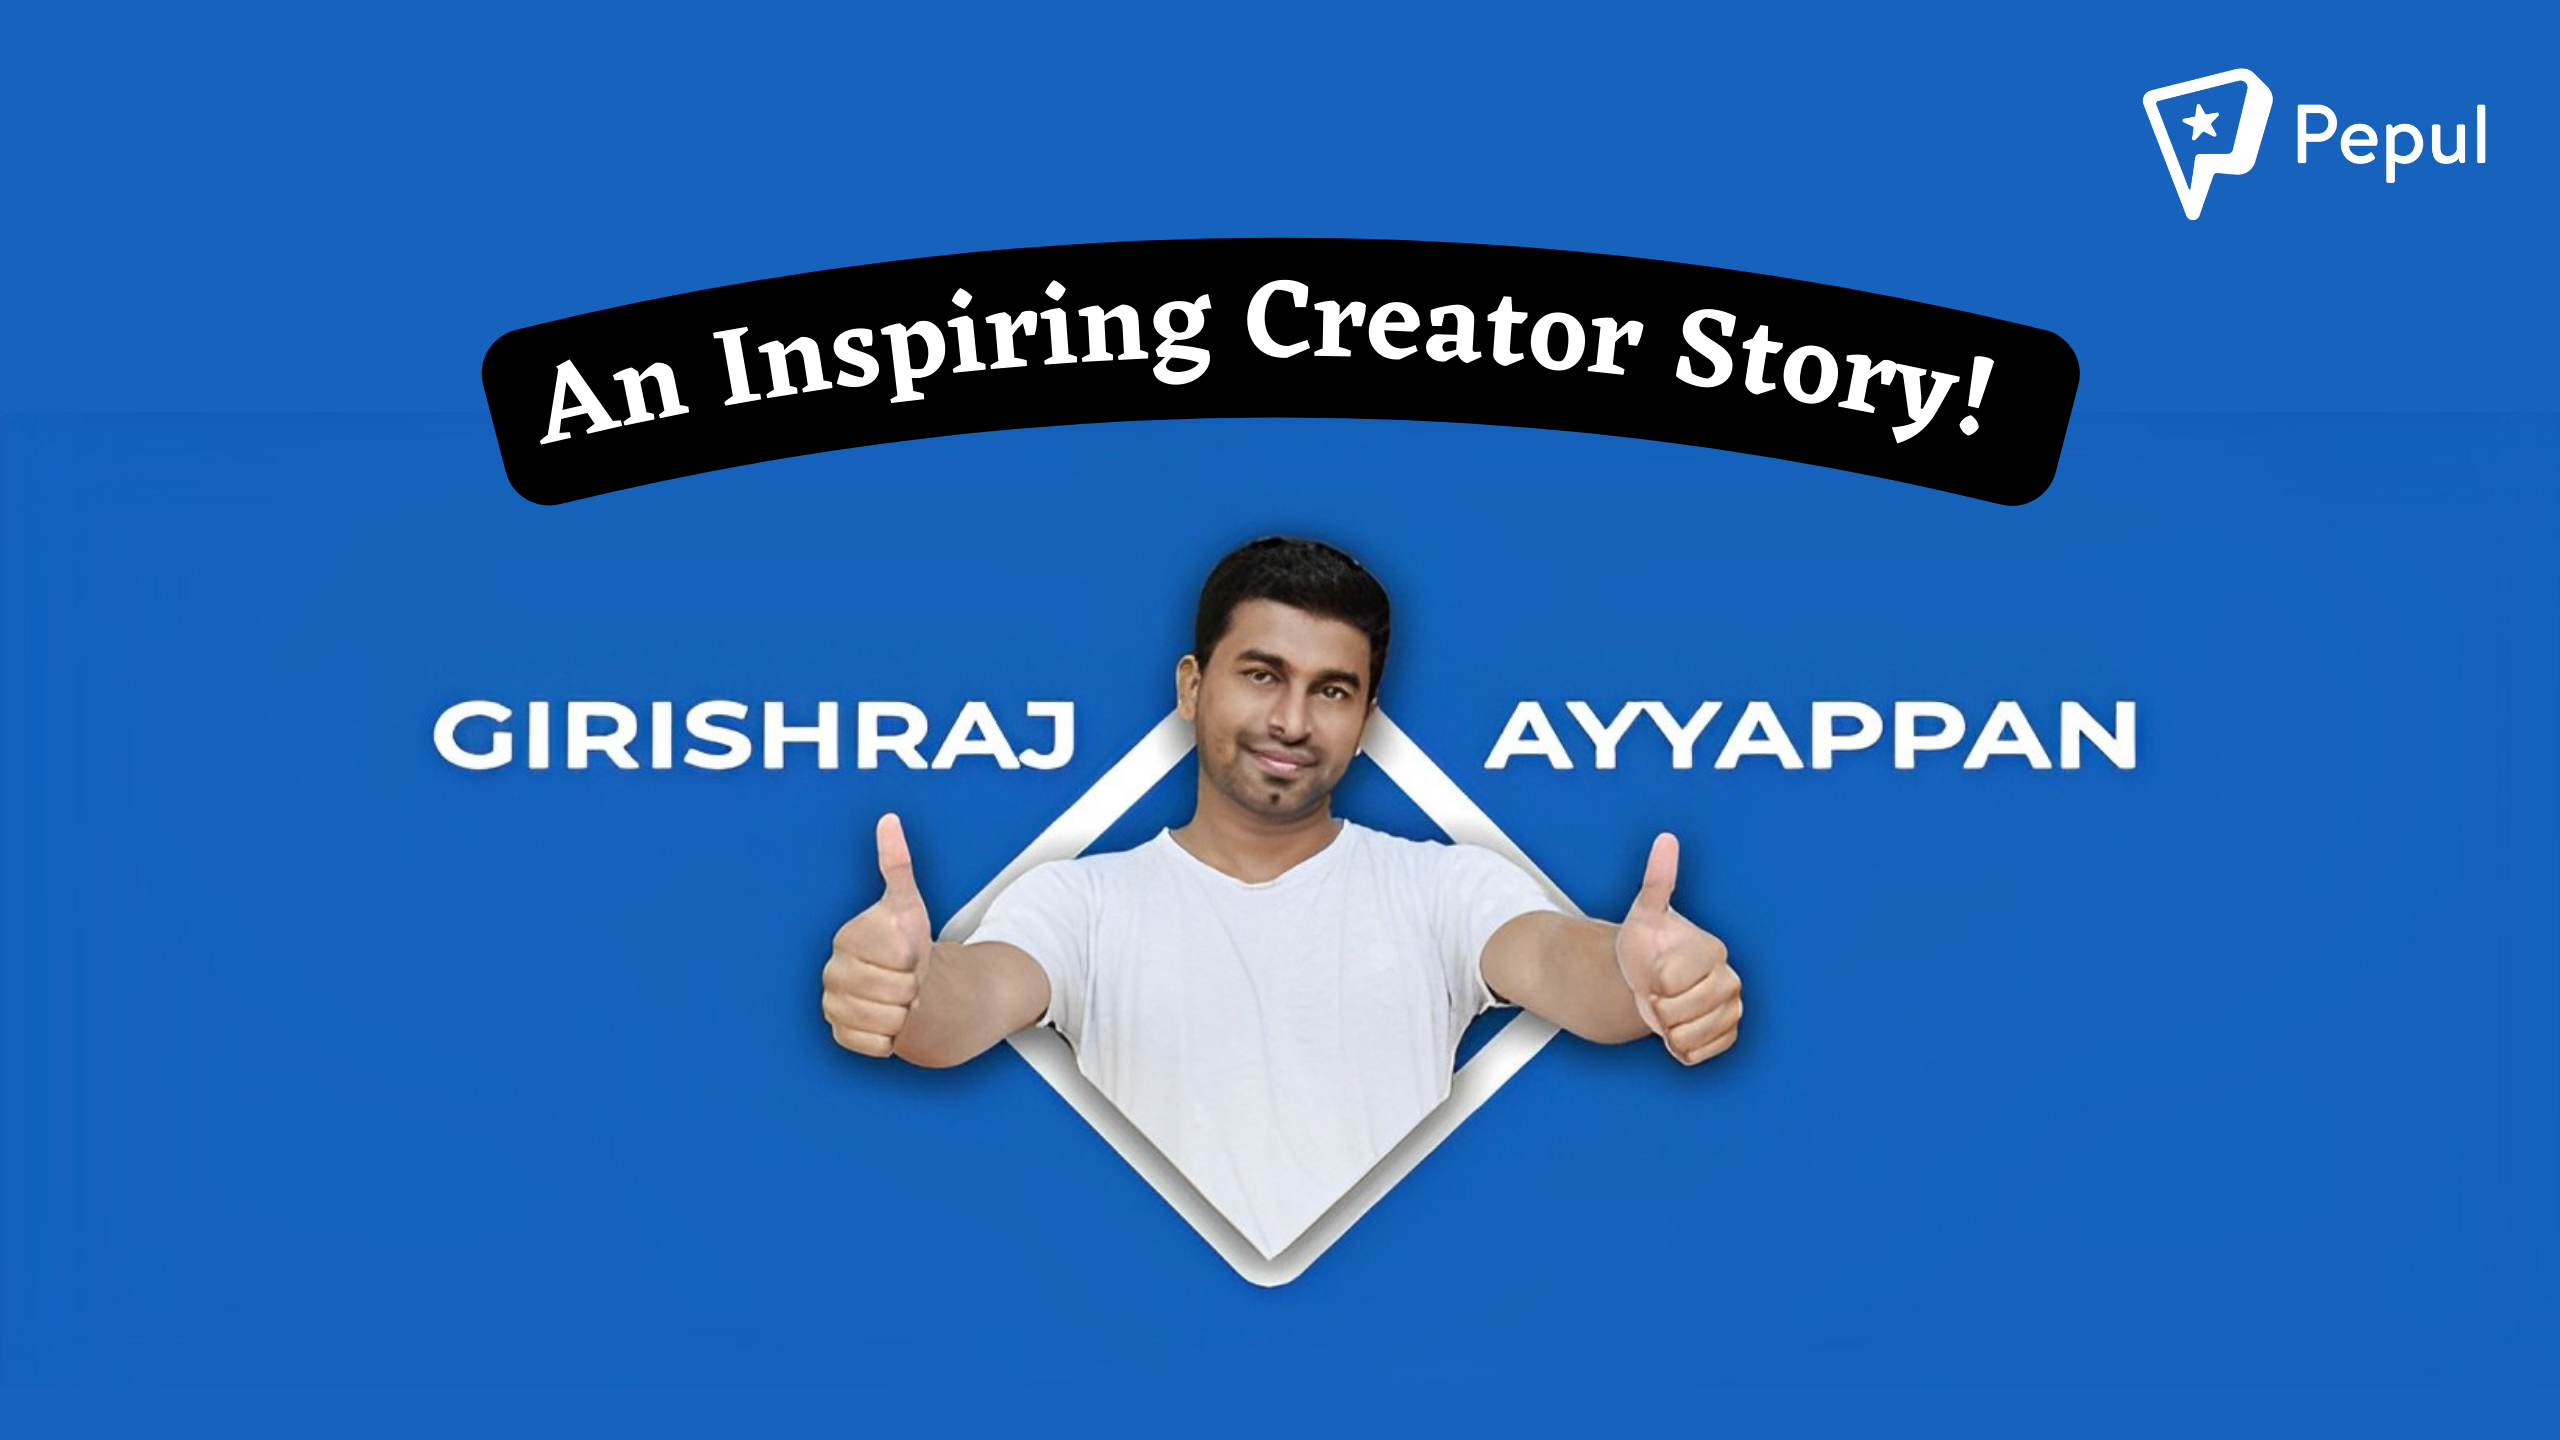 An inspiring story of creator Girishraj Ayyappan